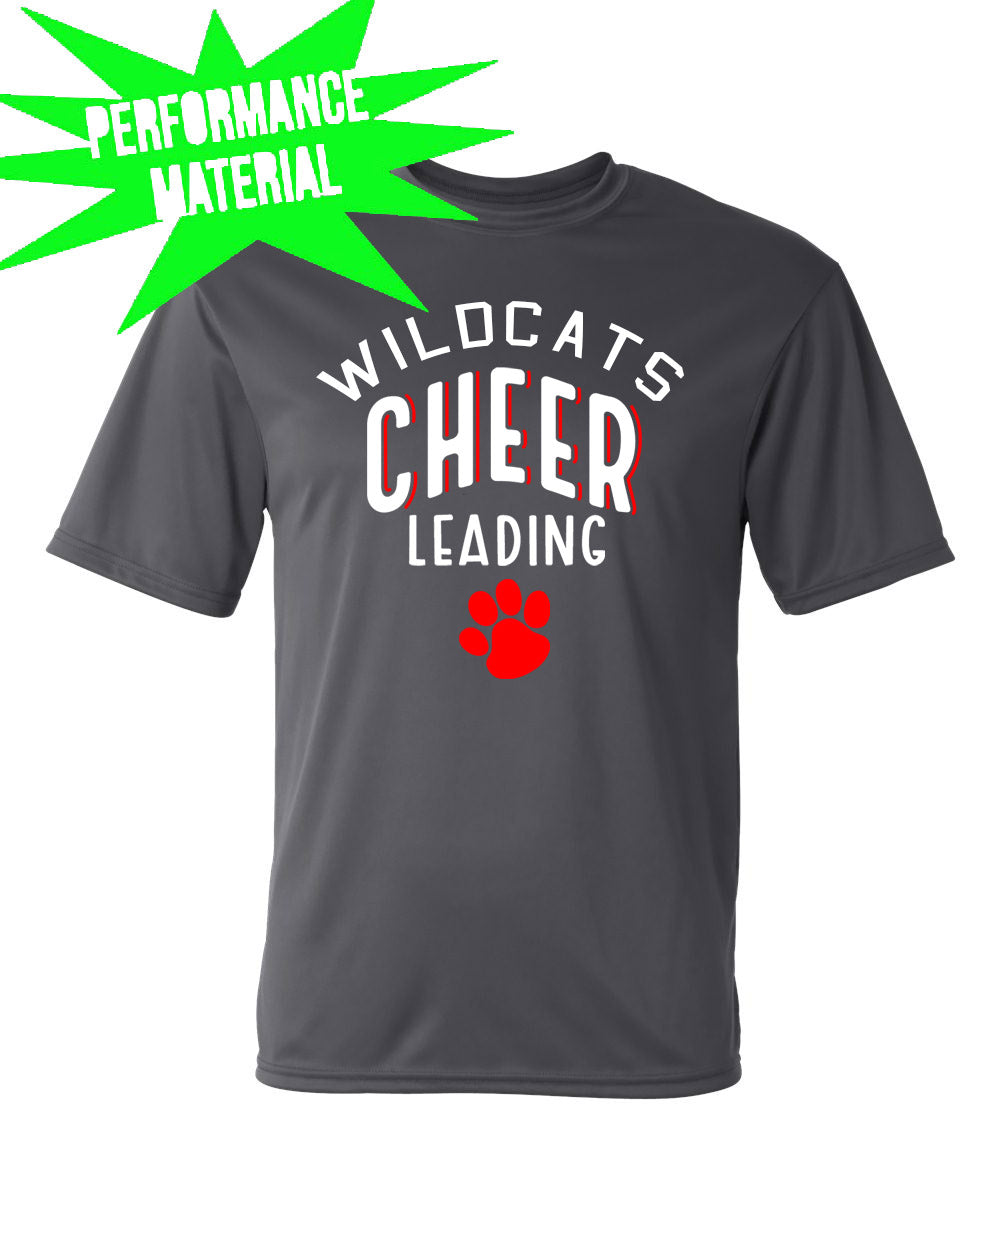 Wildcats Cheer Performance Material design 5 T-Shirt